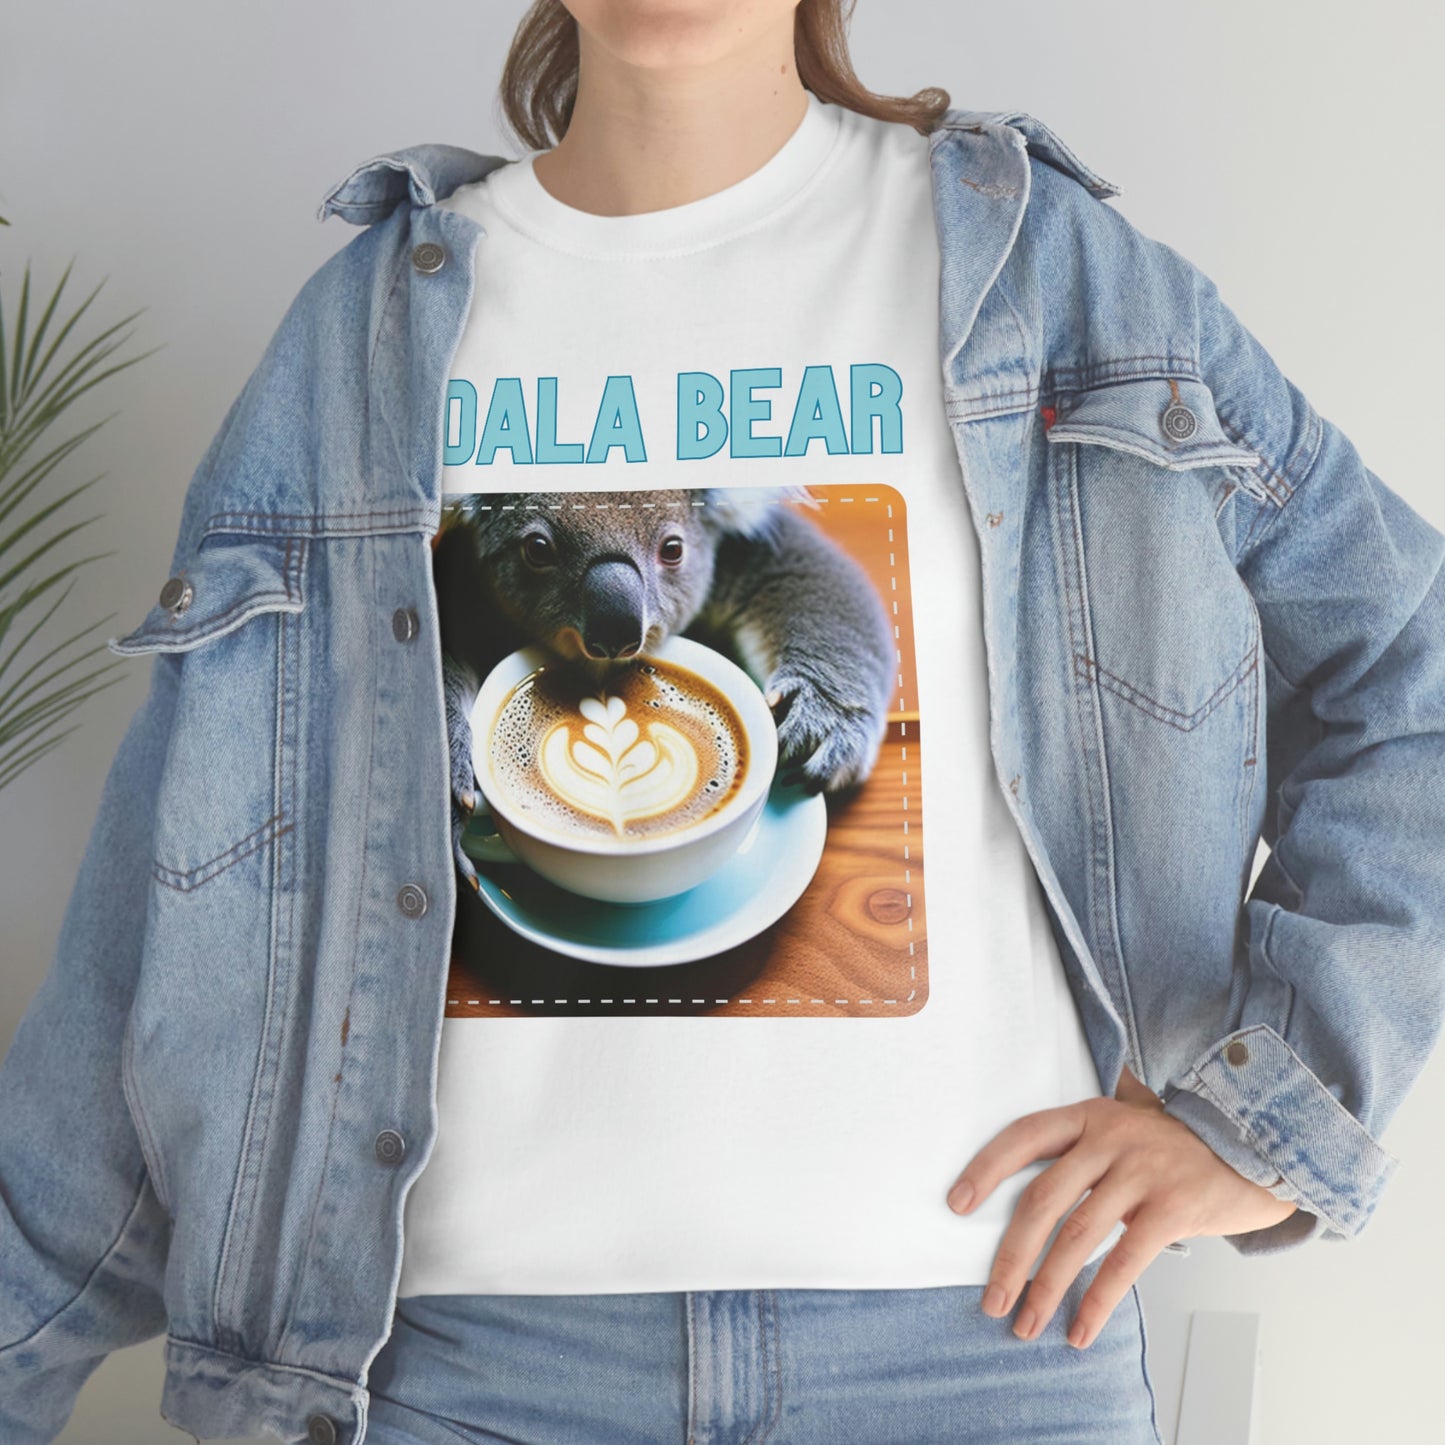 Koala Bear with Latte/Coffee Latte Art Graphic tee shirt